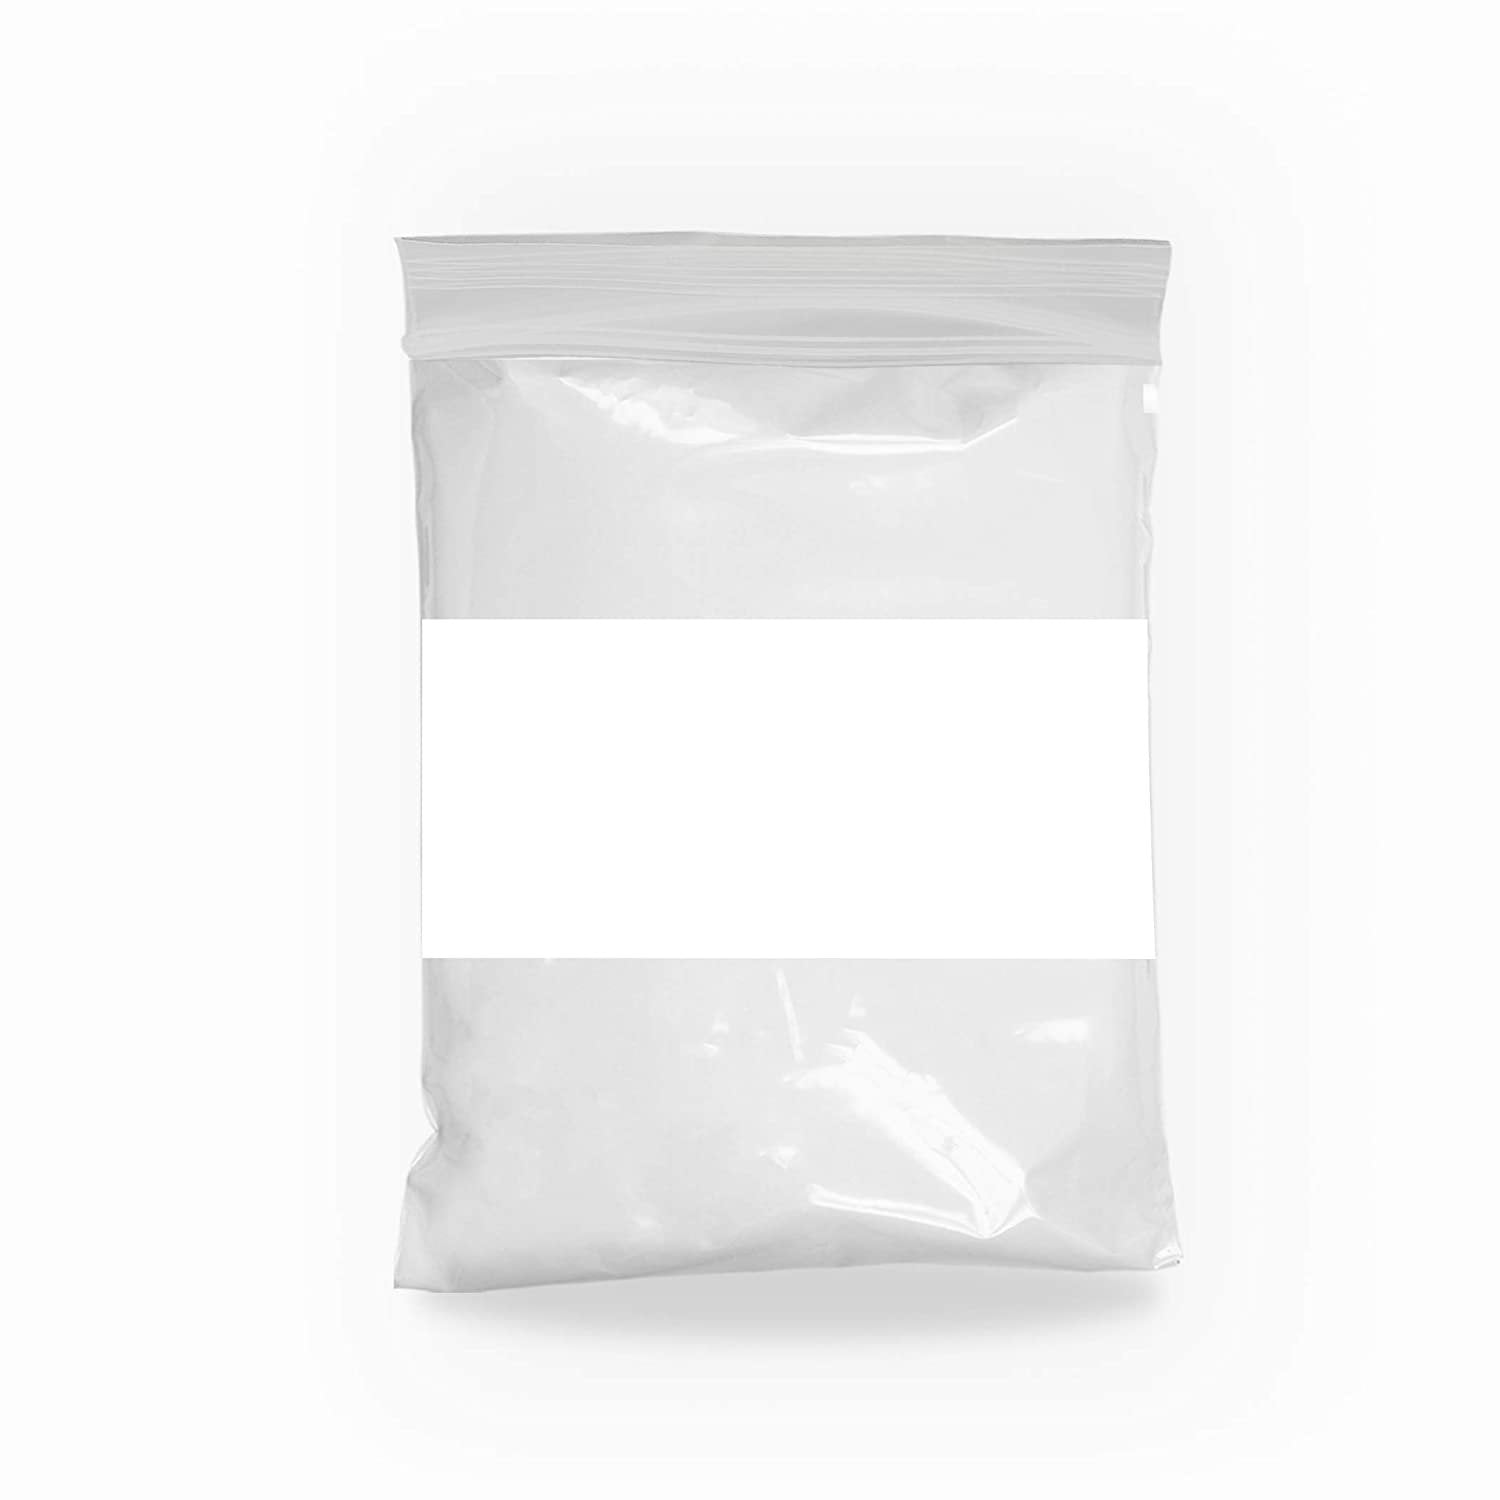 Zipper Bag with White Block 12" x 15" 2 Mil Writable Clear Bead Bags 500 Pcs 